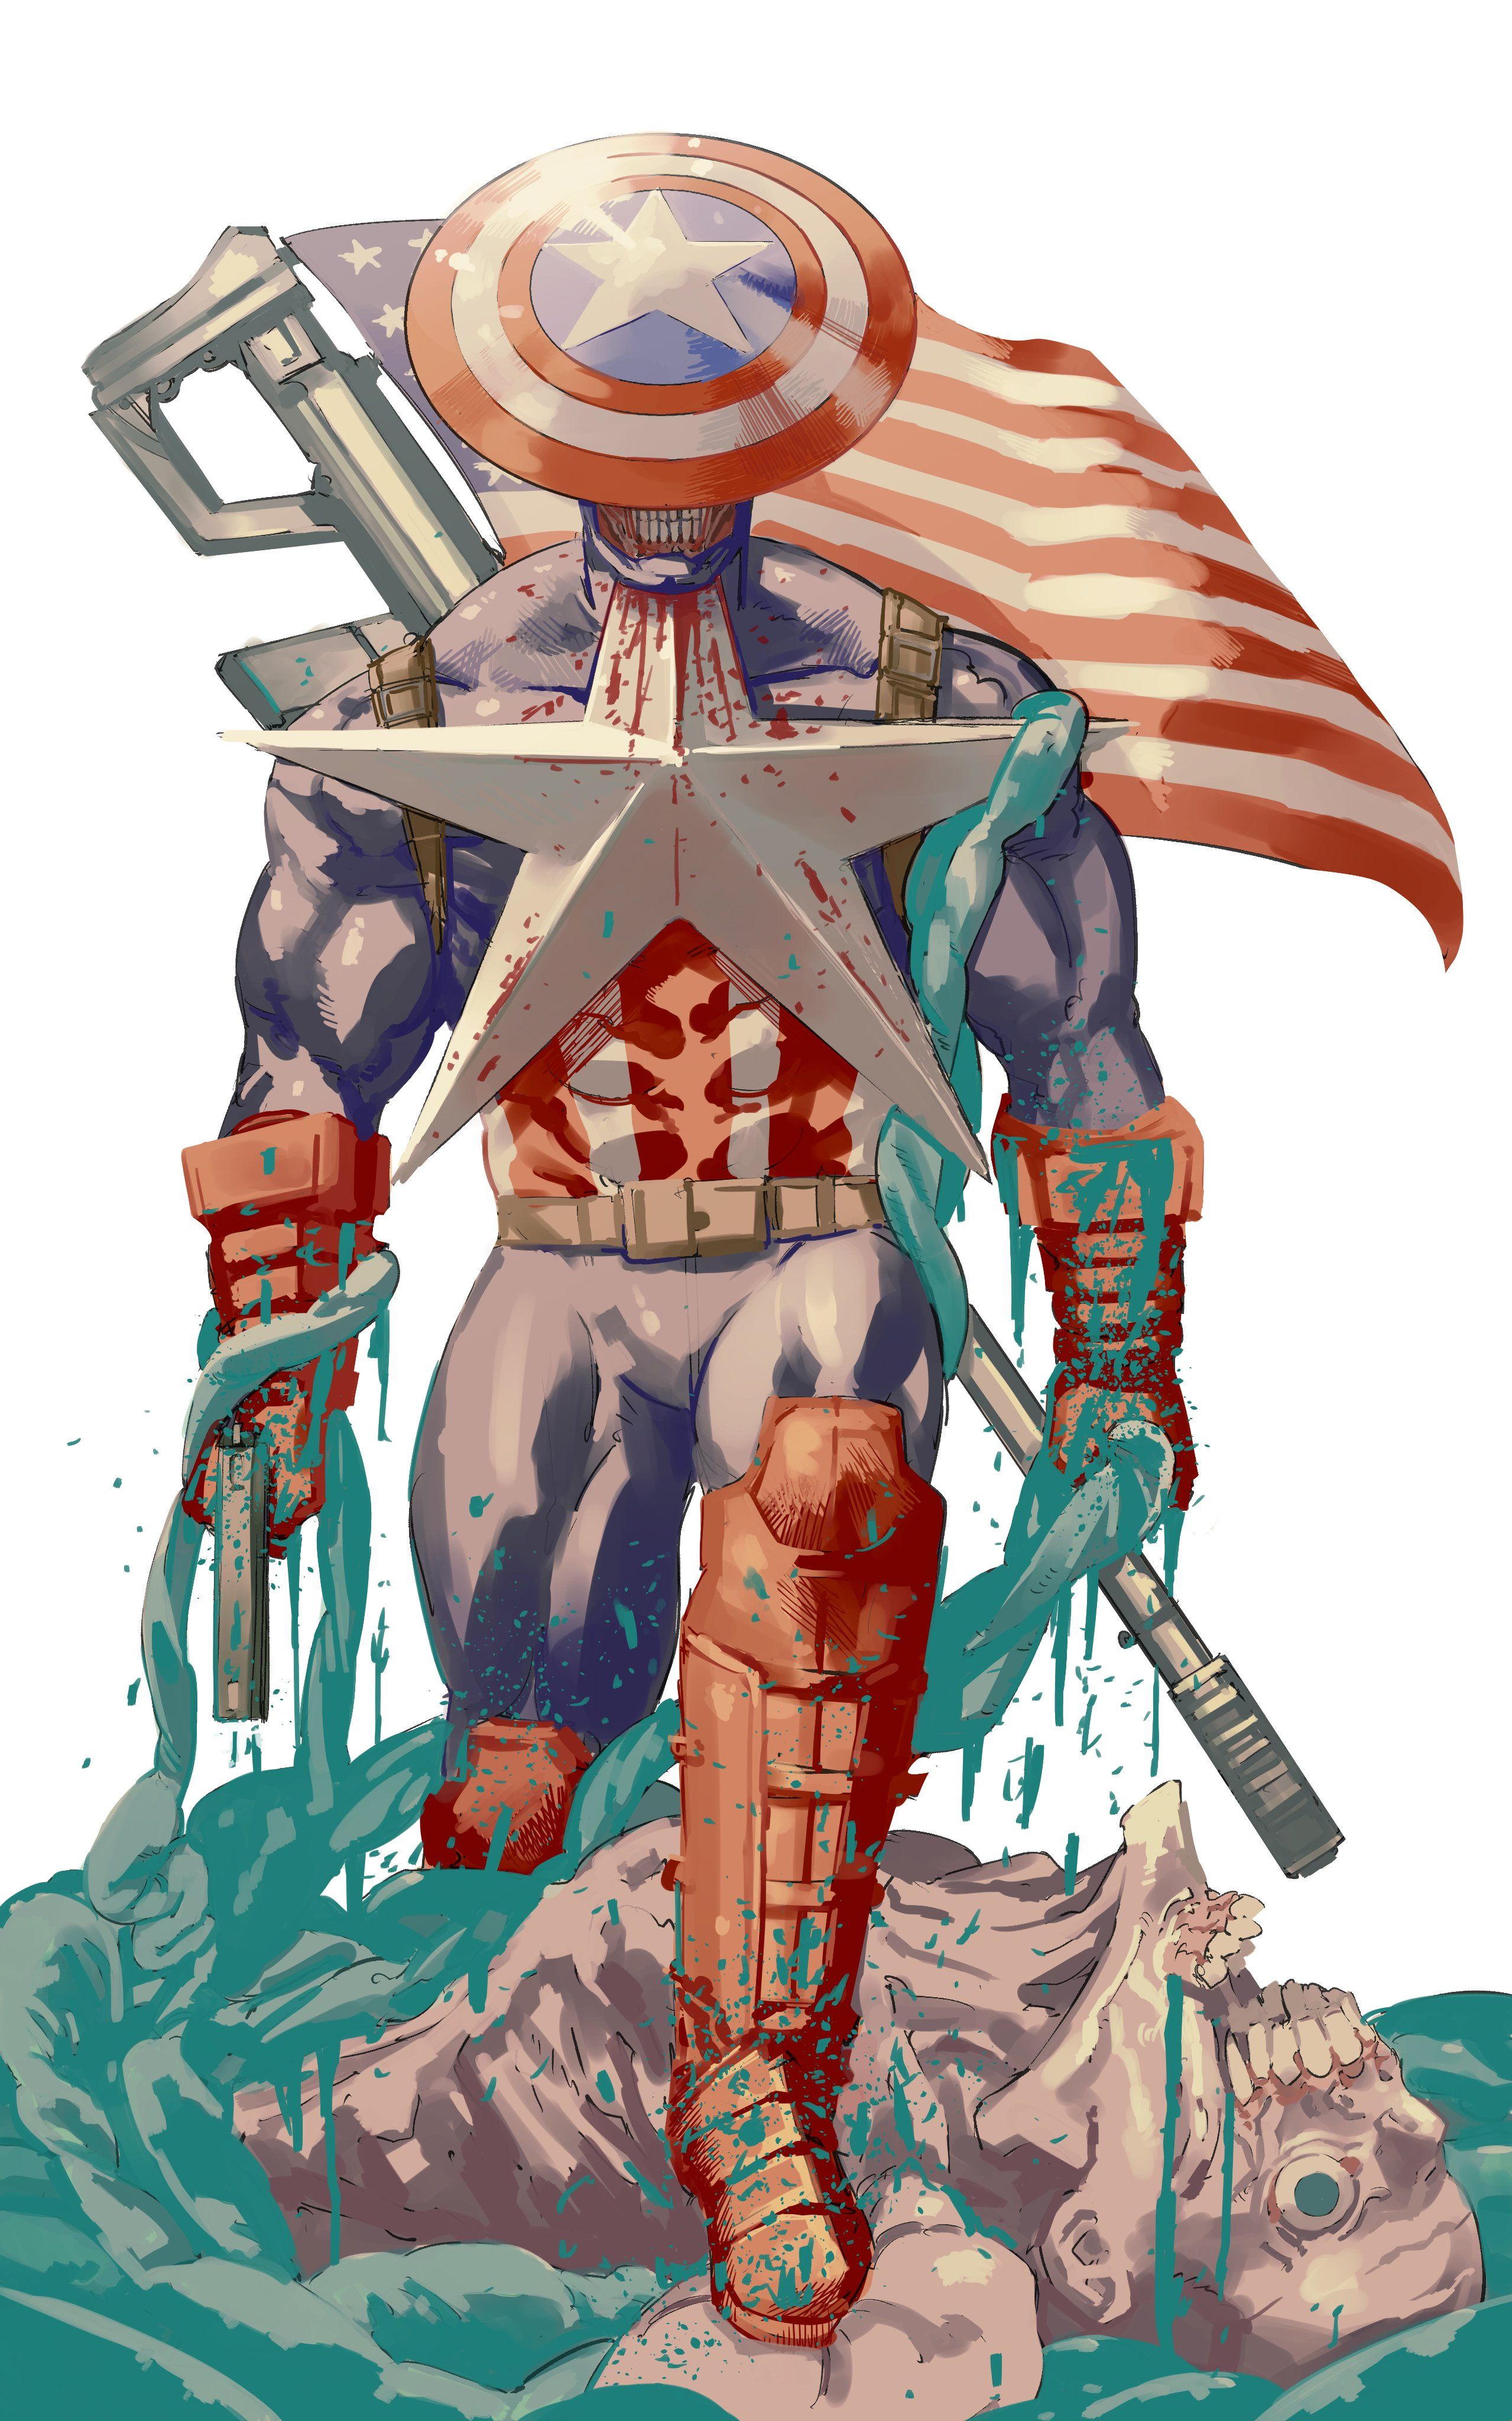 Chainsaw Man Creator Shares Disturbing Fan Art of Captain America